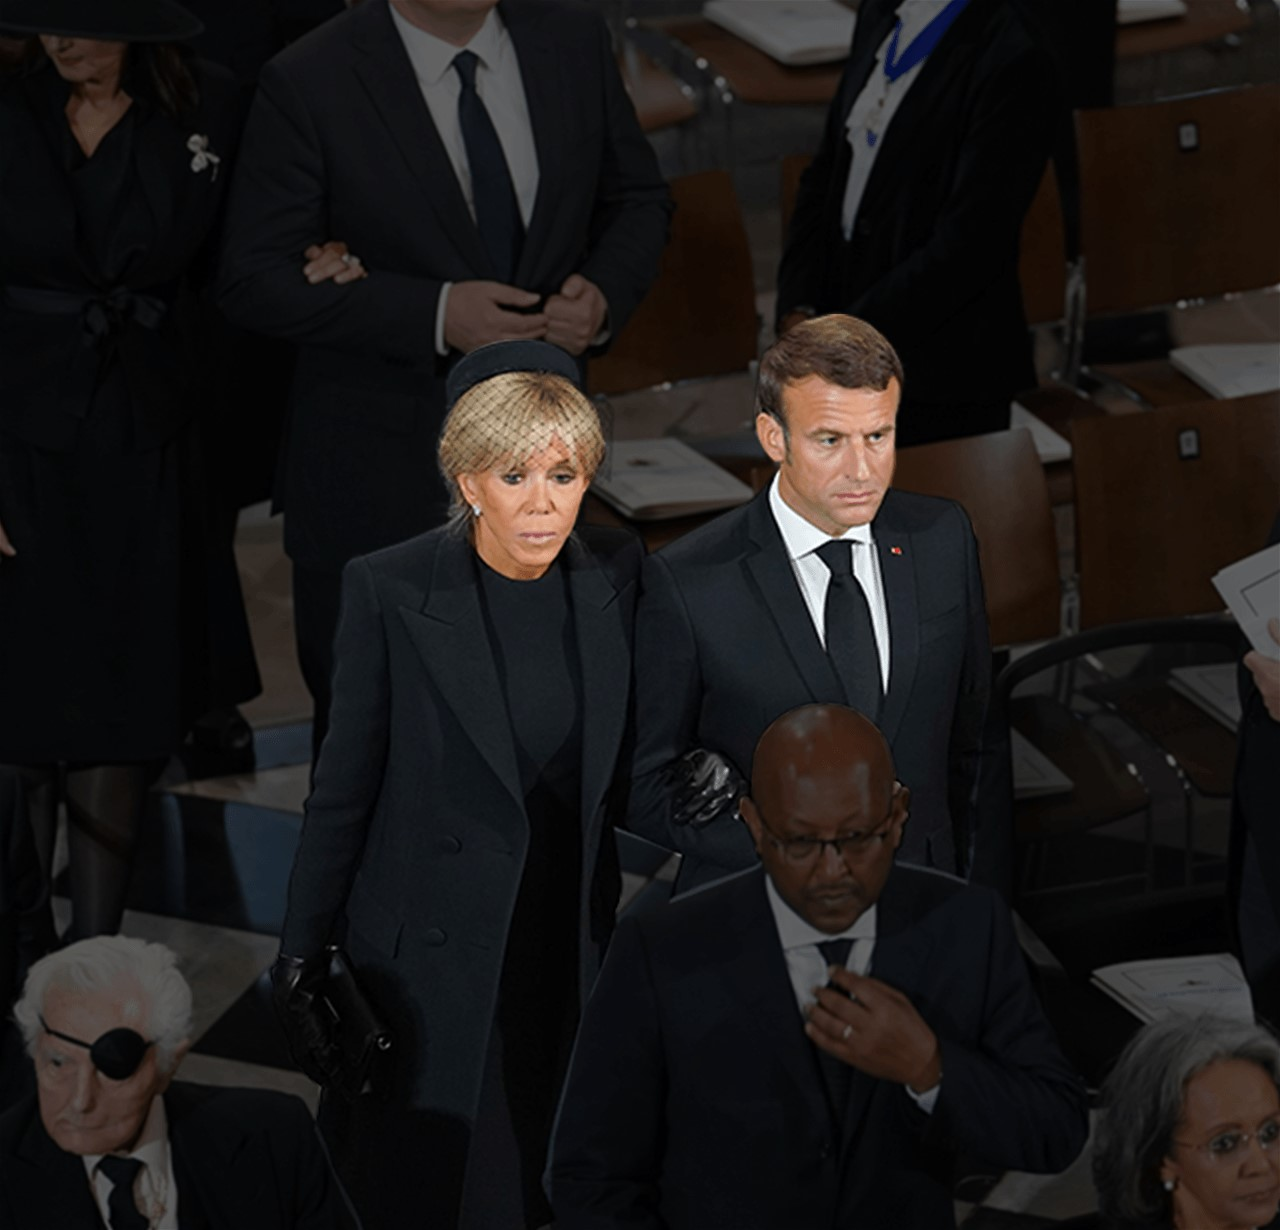 Brigitte y Emmanuel Macron